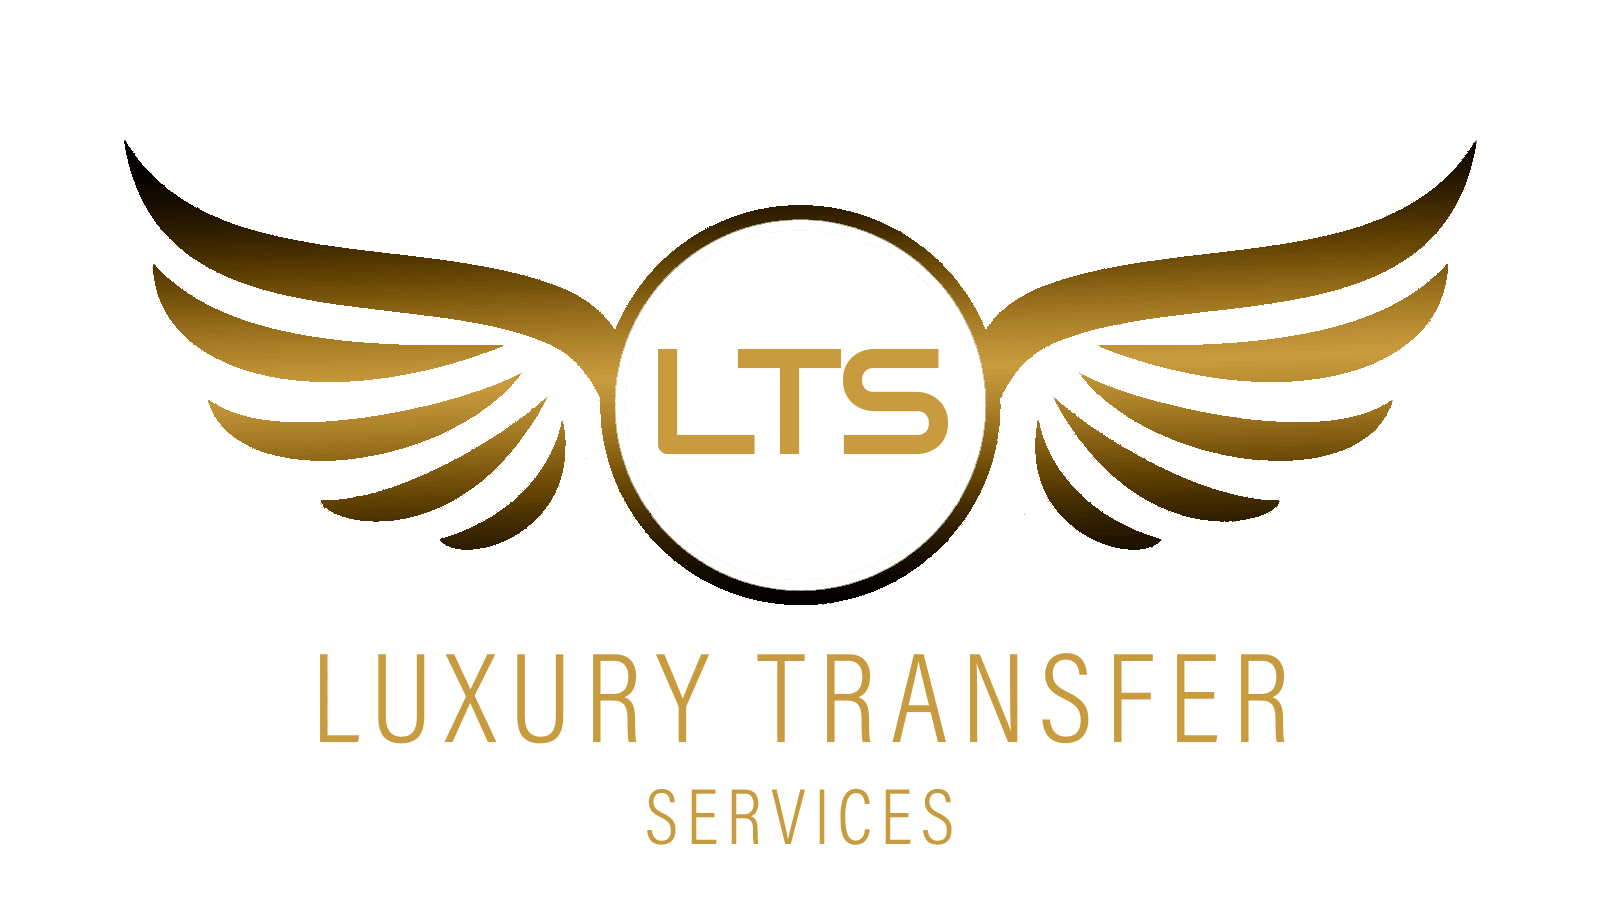 Luxury transfer